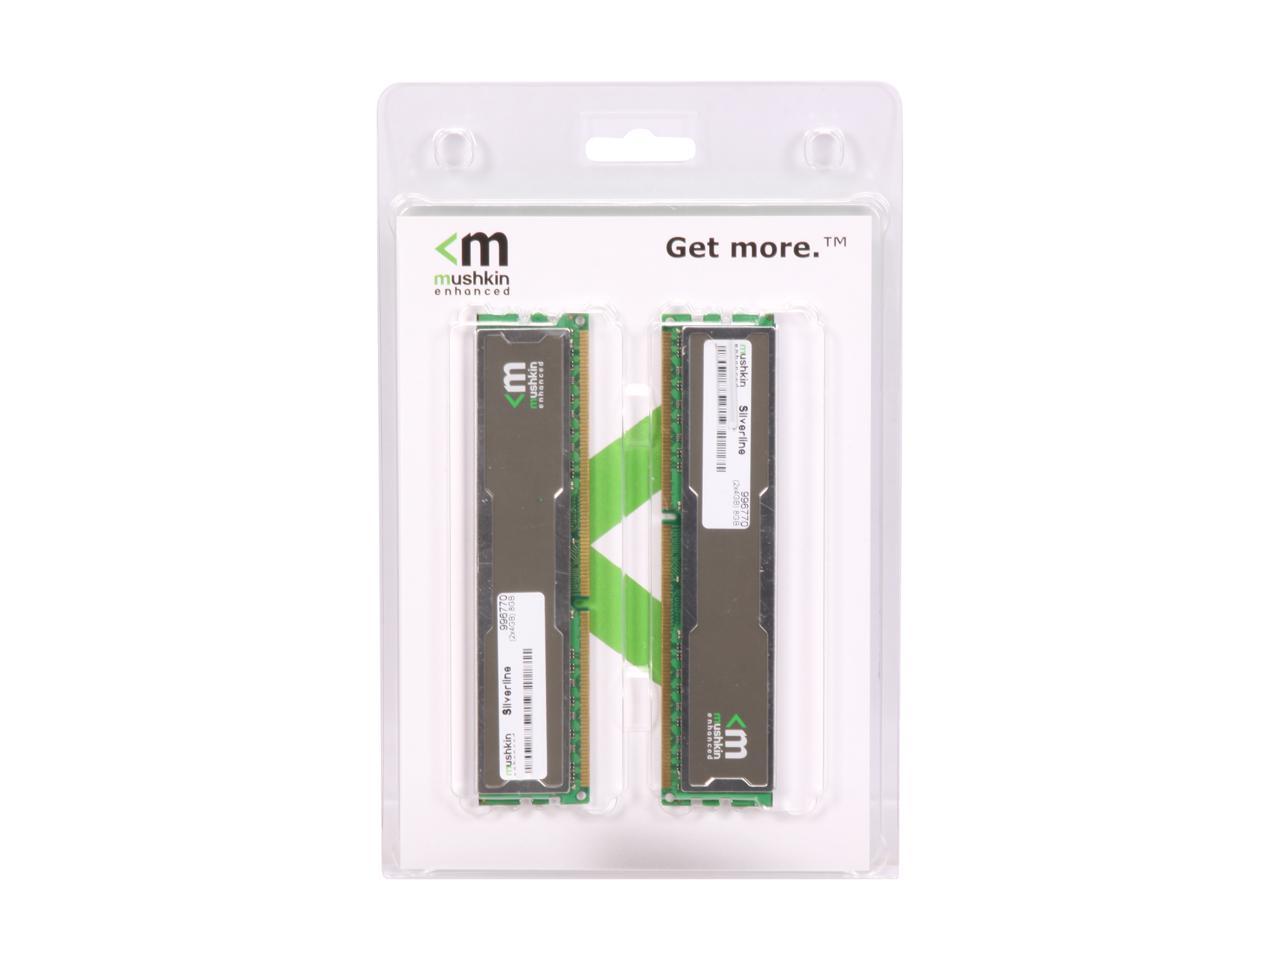 Mushkin Enhanced Silverline 8GB (2 x 4GB) DDR3 1333 (PC3 10666) Desktop Memory Model 996770